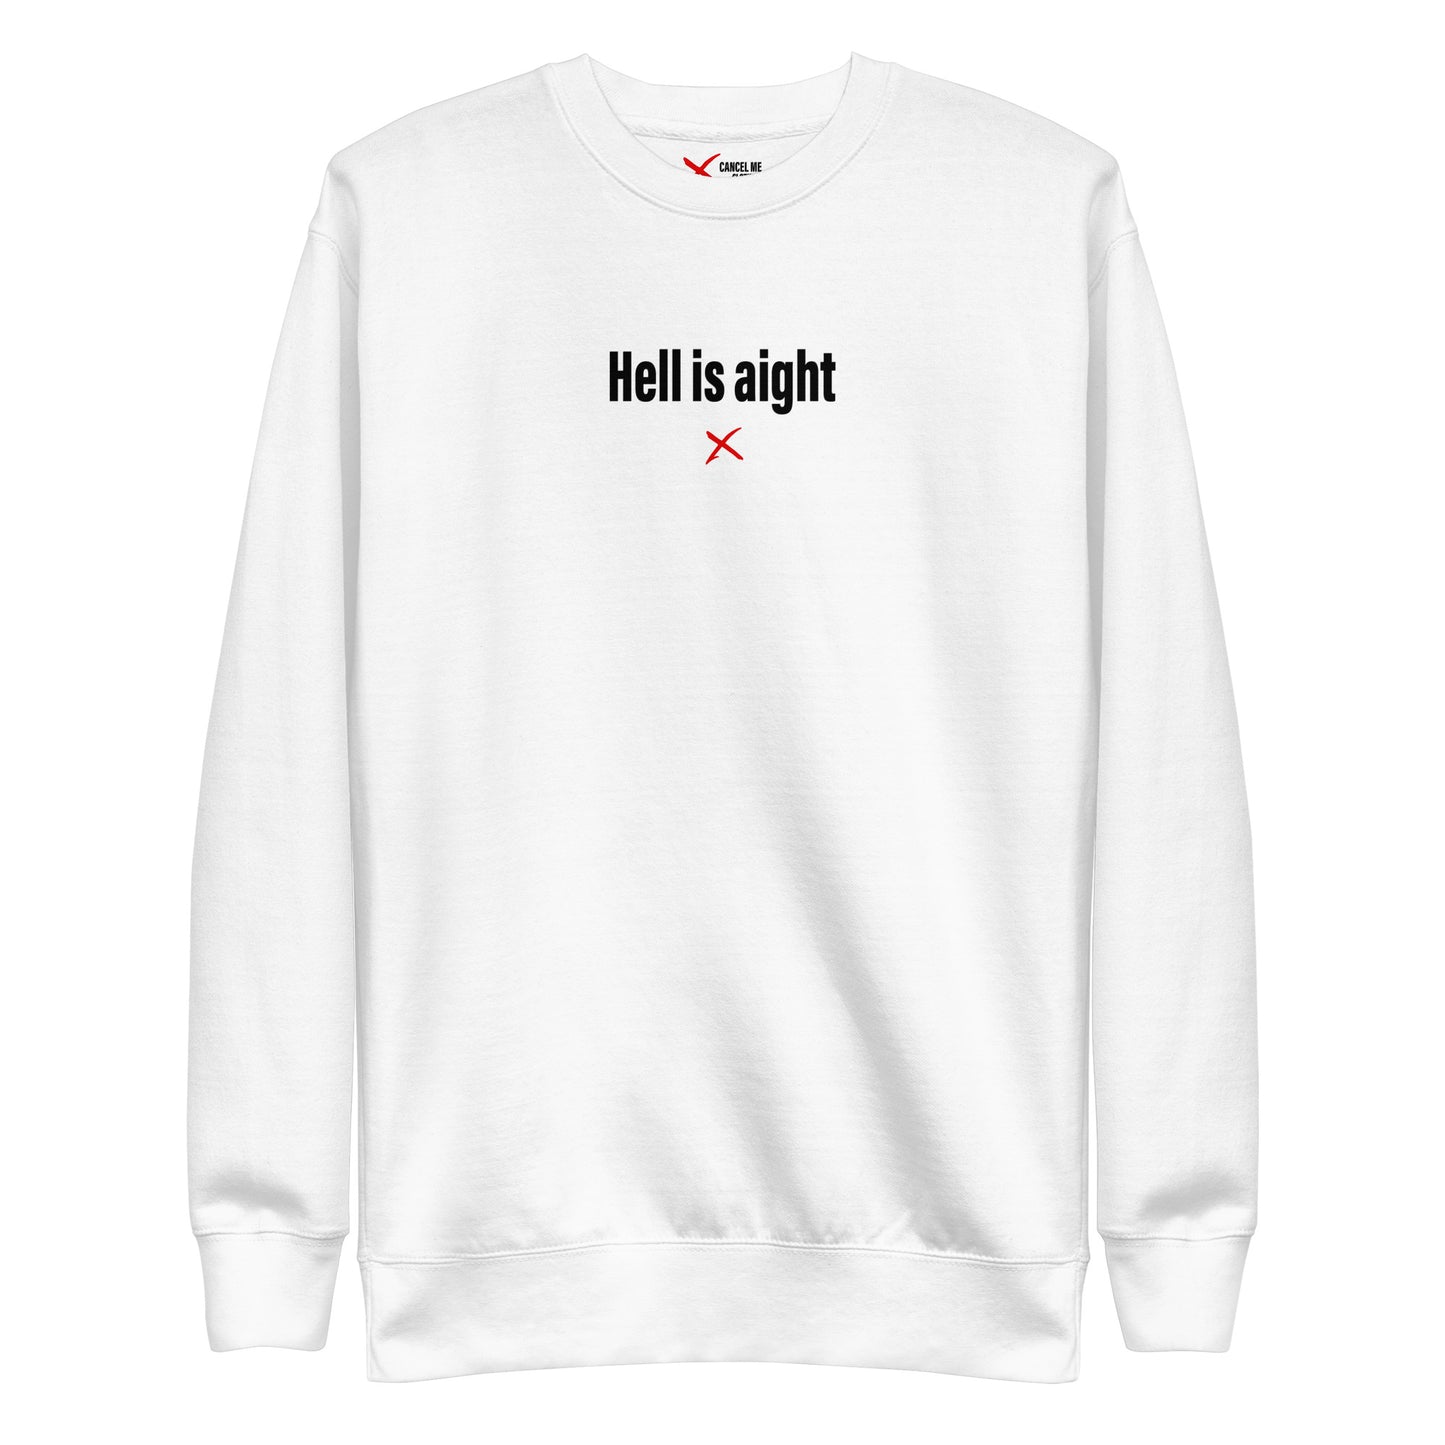 Hell is aight - Sweatshirt